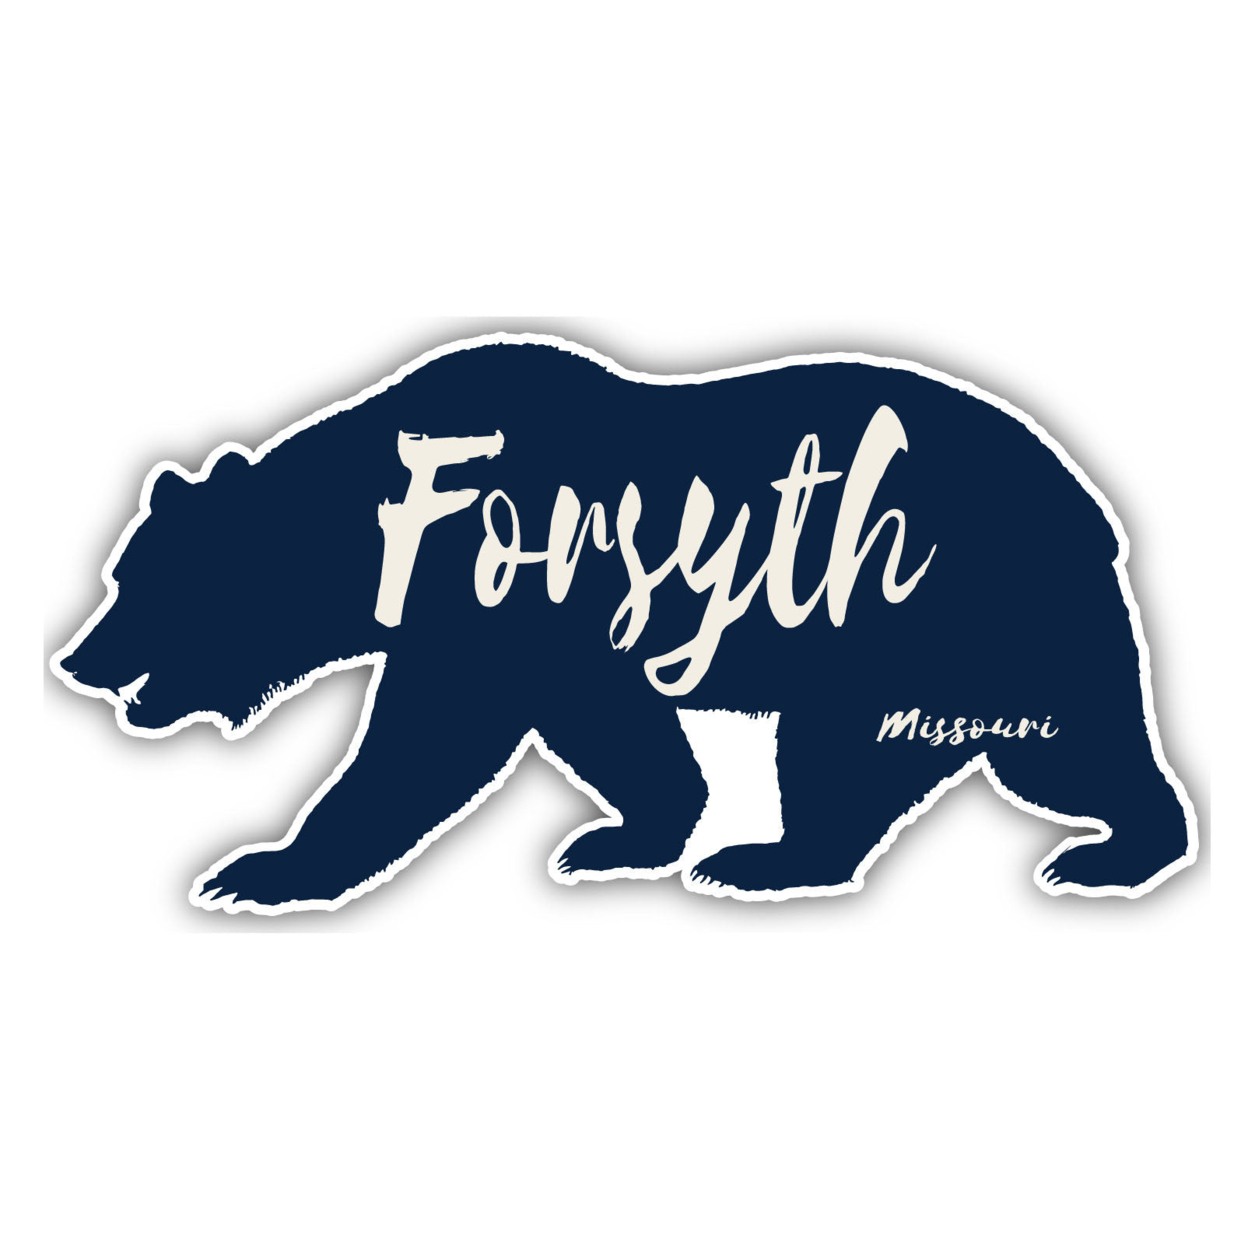 Forsyth Missouri Souvenir Decorative Stickers (Choose Theme And Size) - Single Unit, 8-Inch, Bear